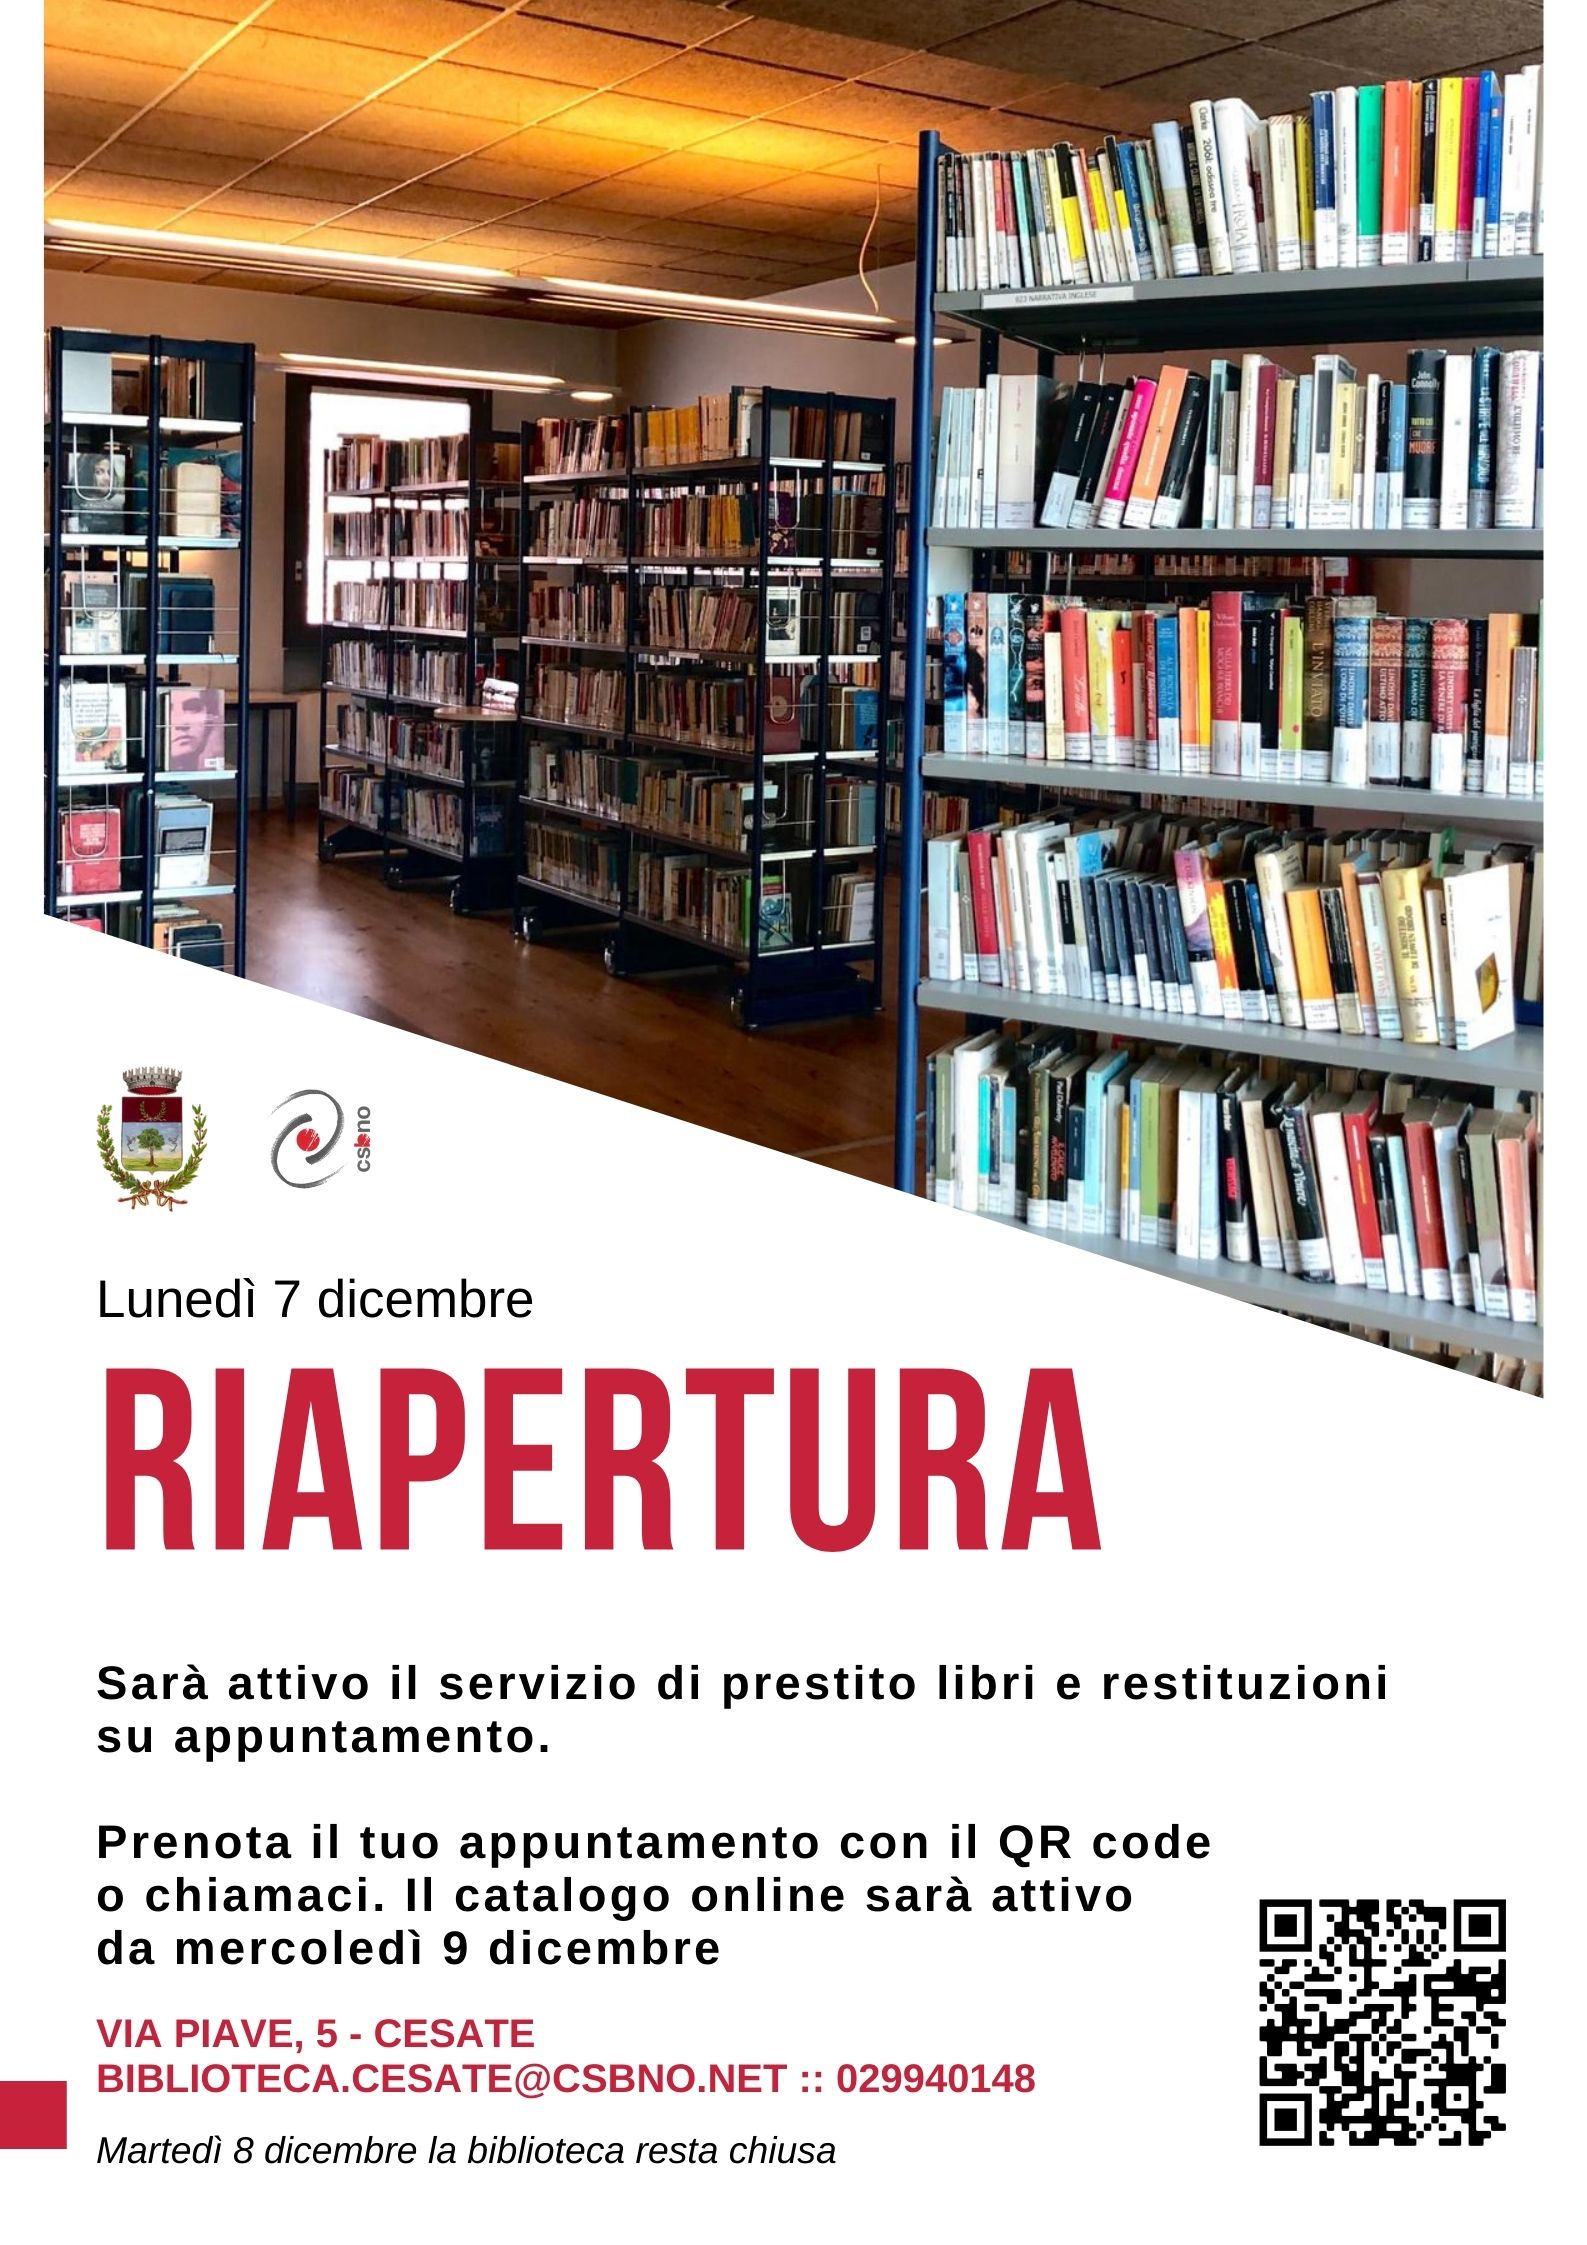 La Biblioteca Comunale di Cesate riapre lunedì 7 dicembre